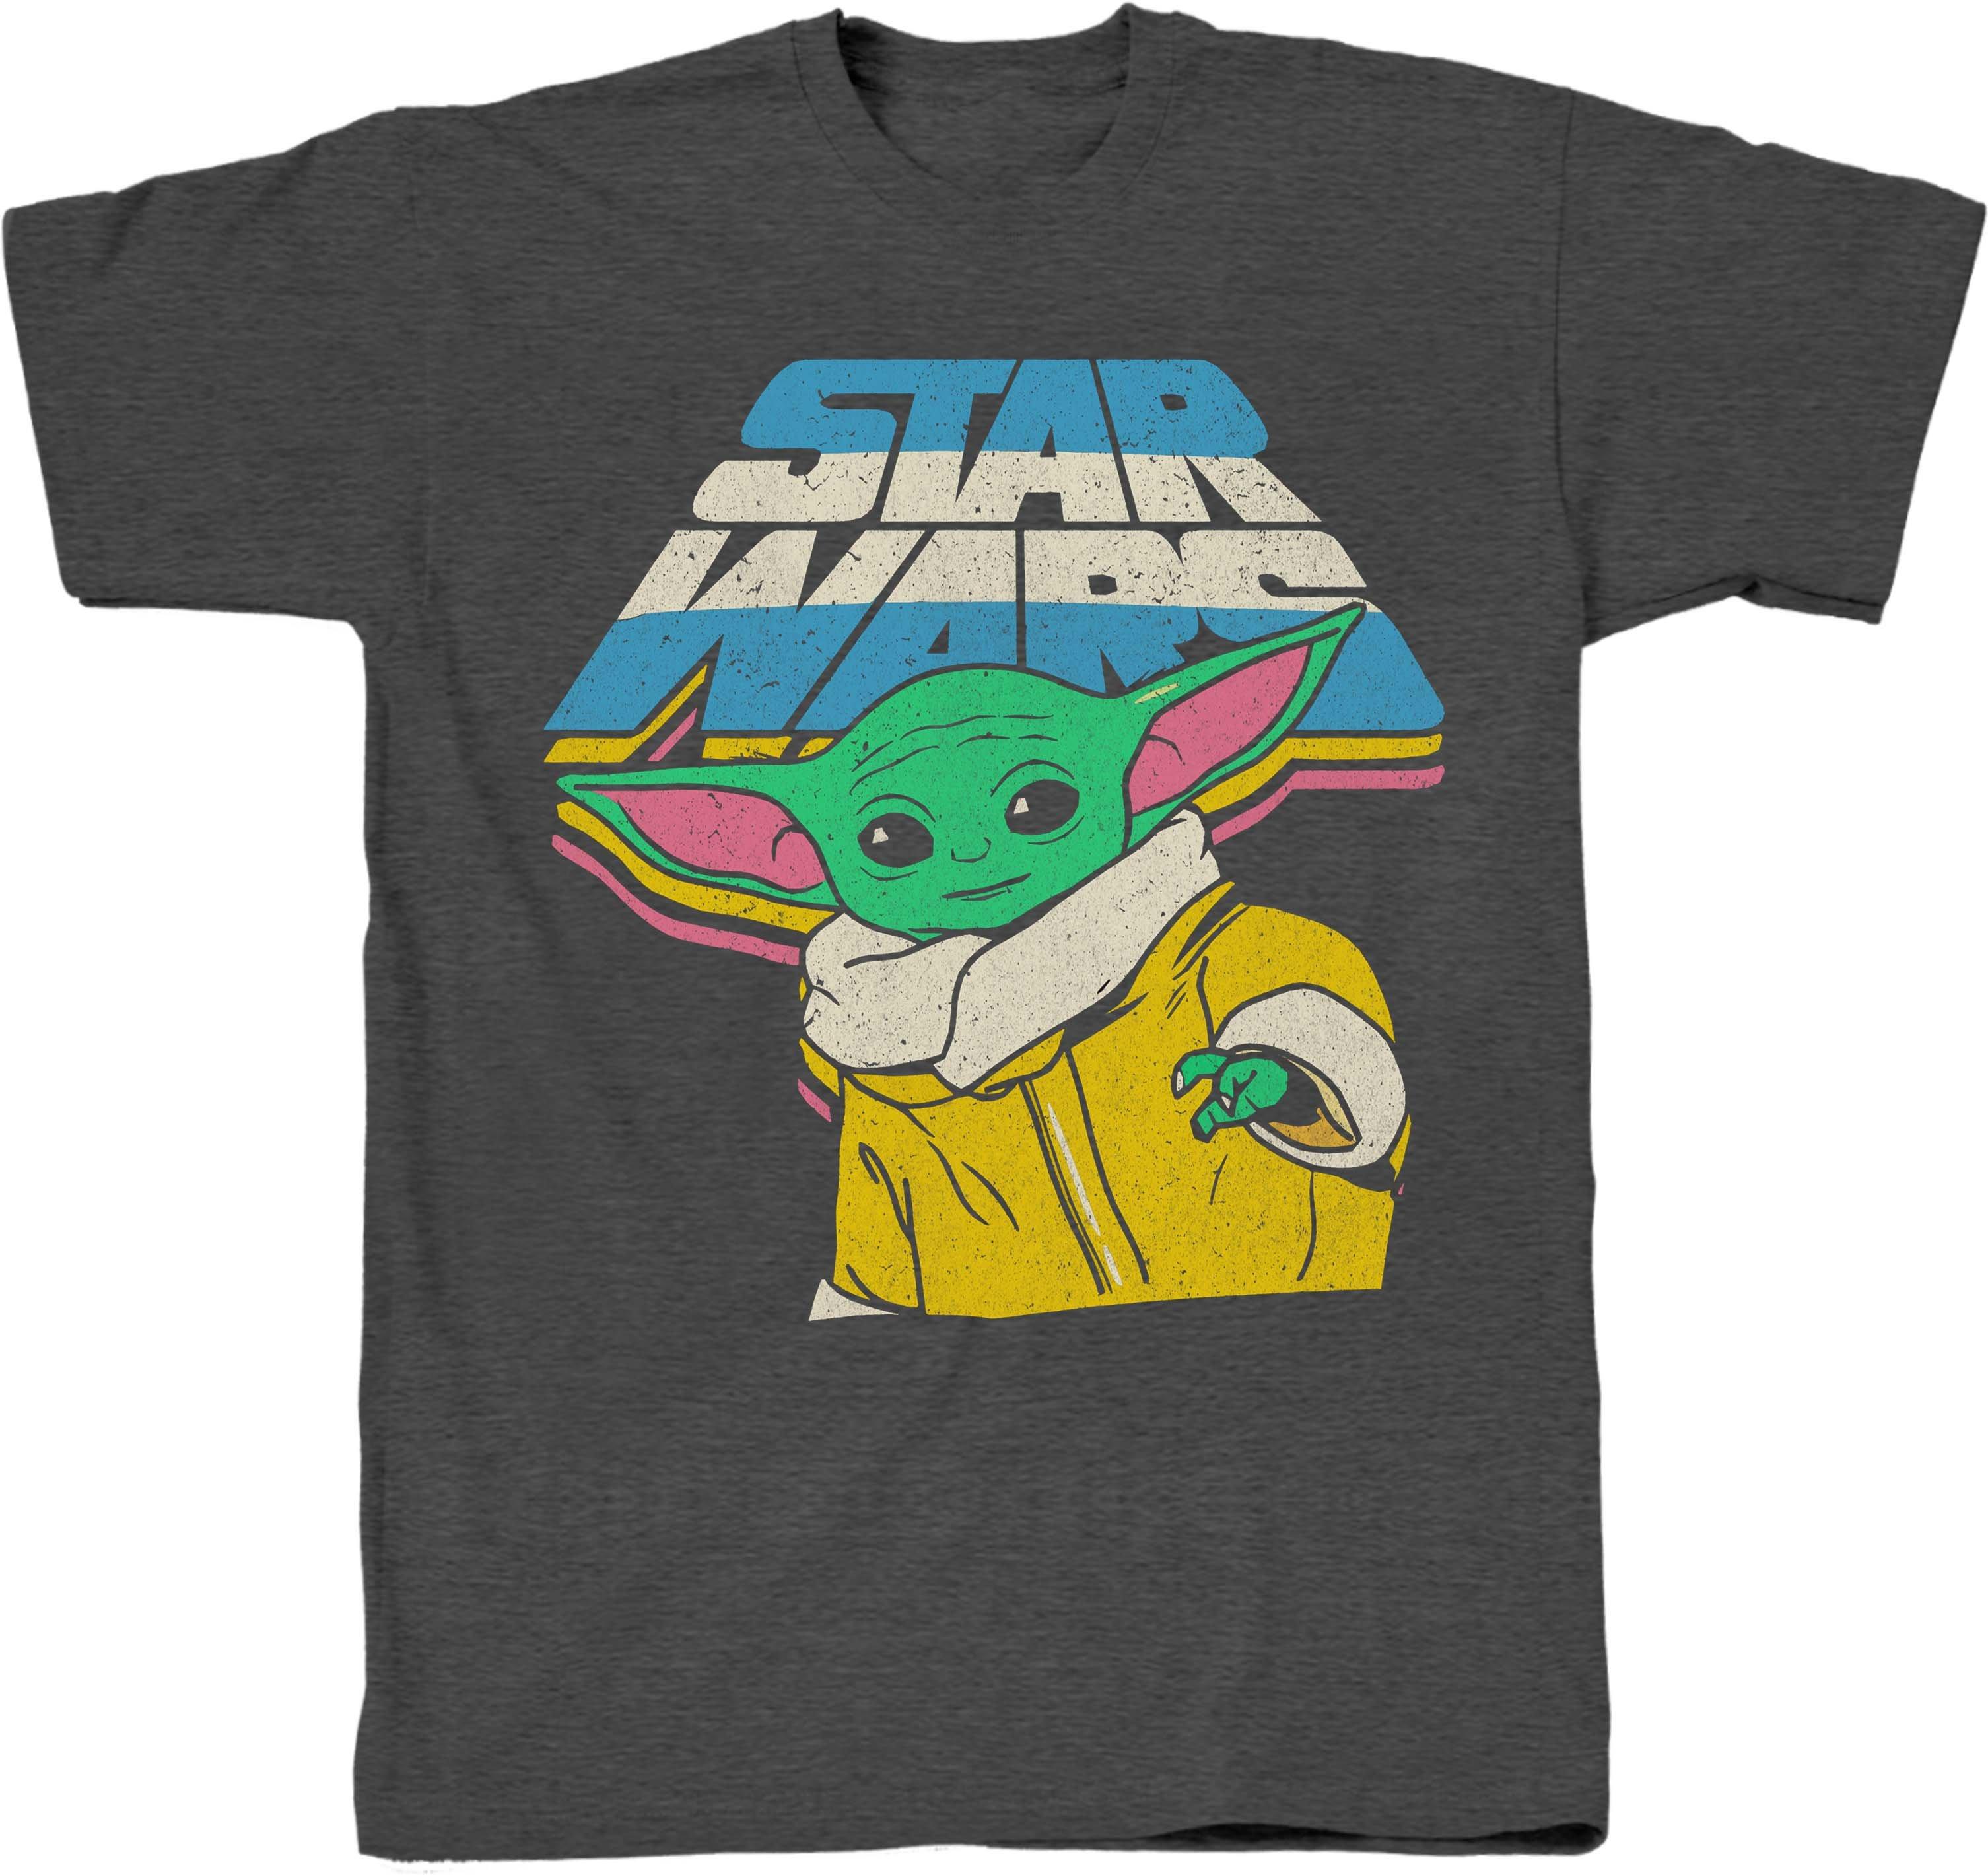 Star Wars Grogu Name Drop T-Shirt